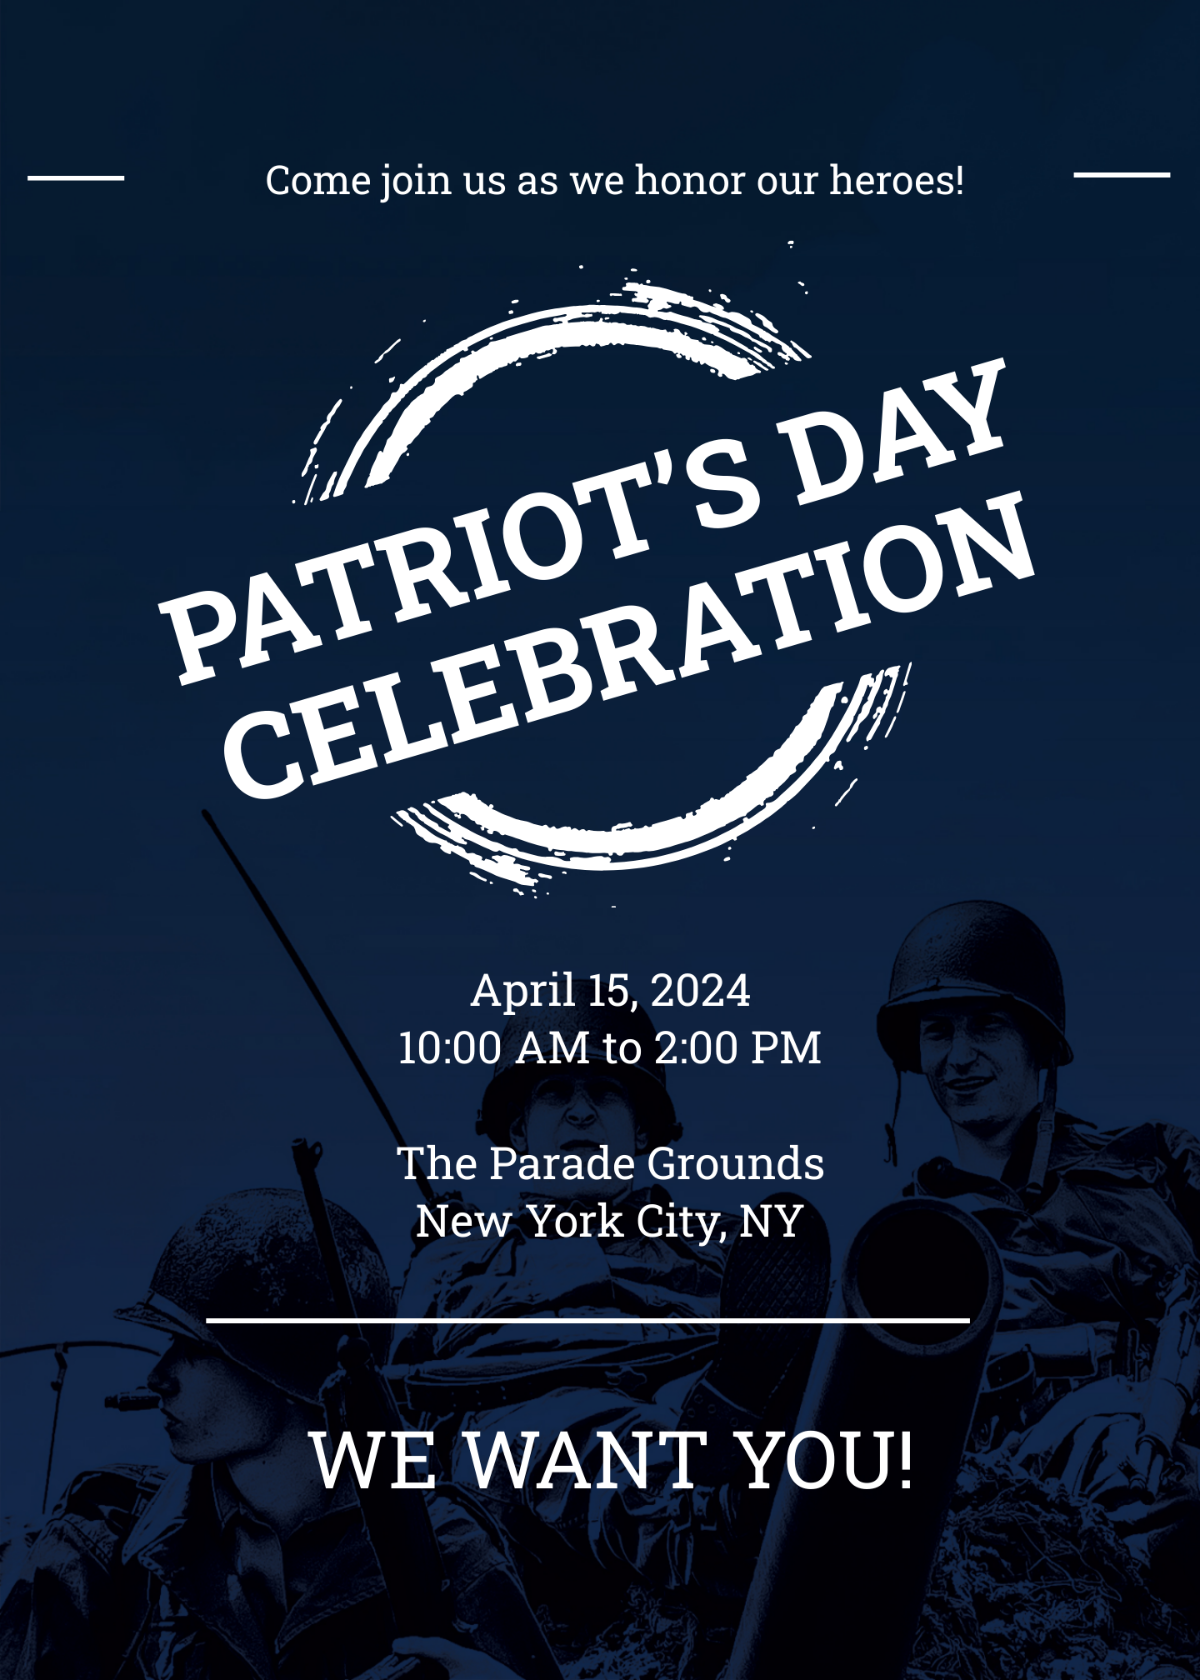 Free Patriot's Day Invitation Template